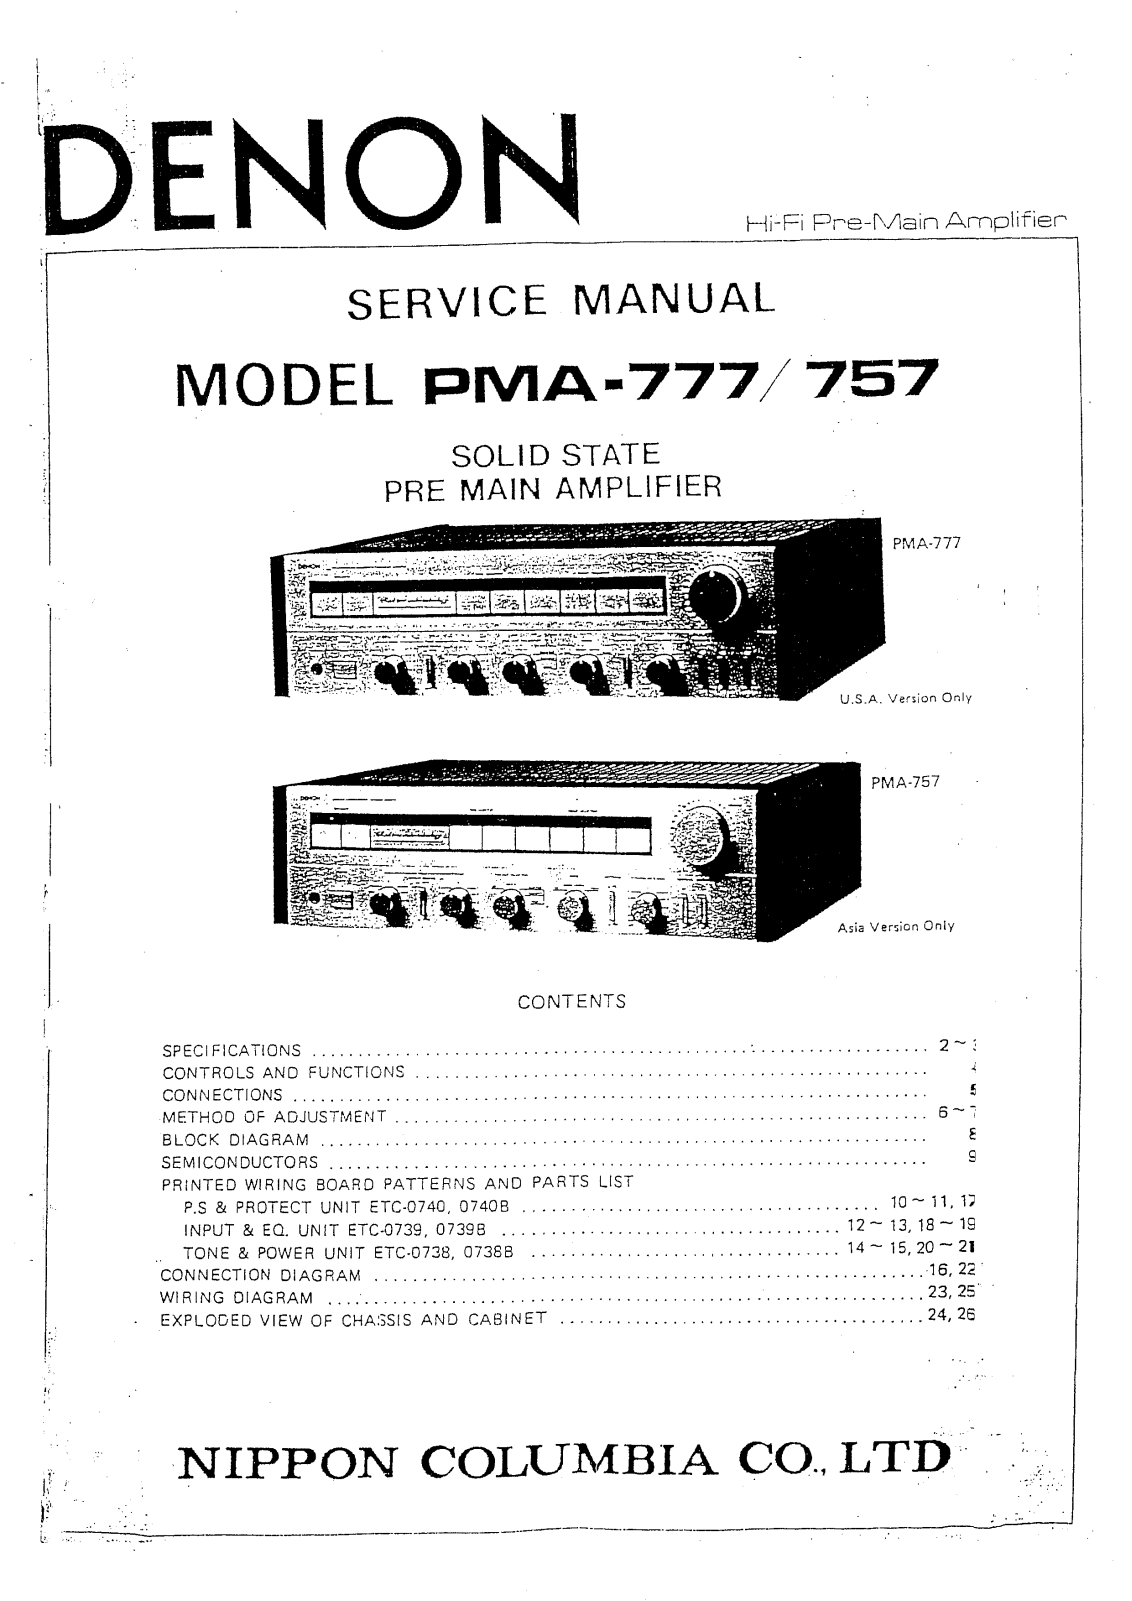 Denon PMA-757, PMA-777 Service Manual